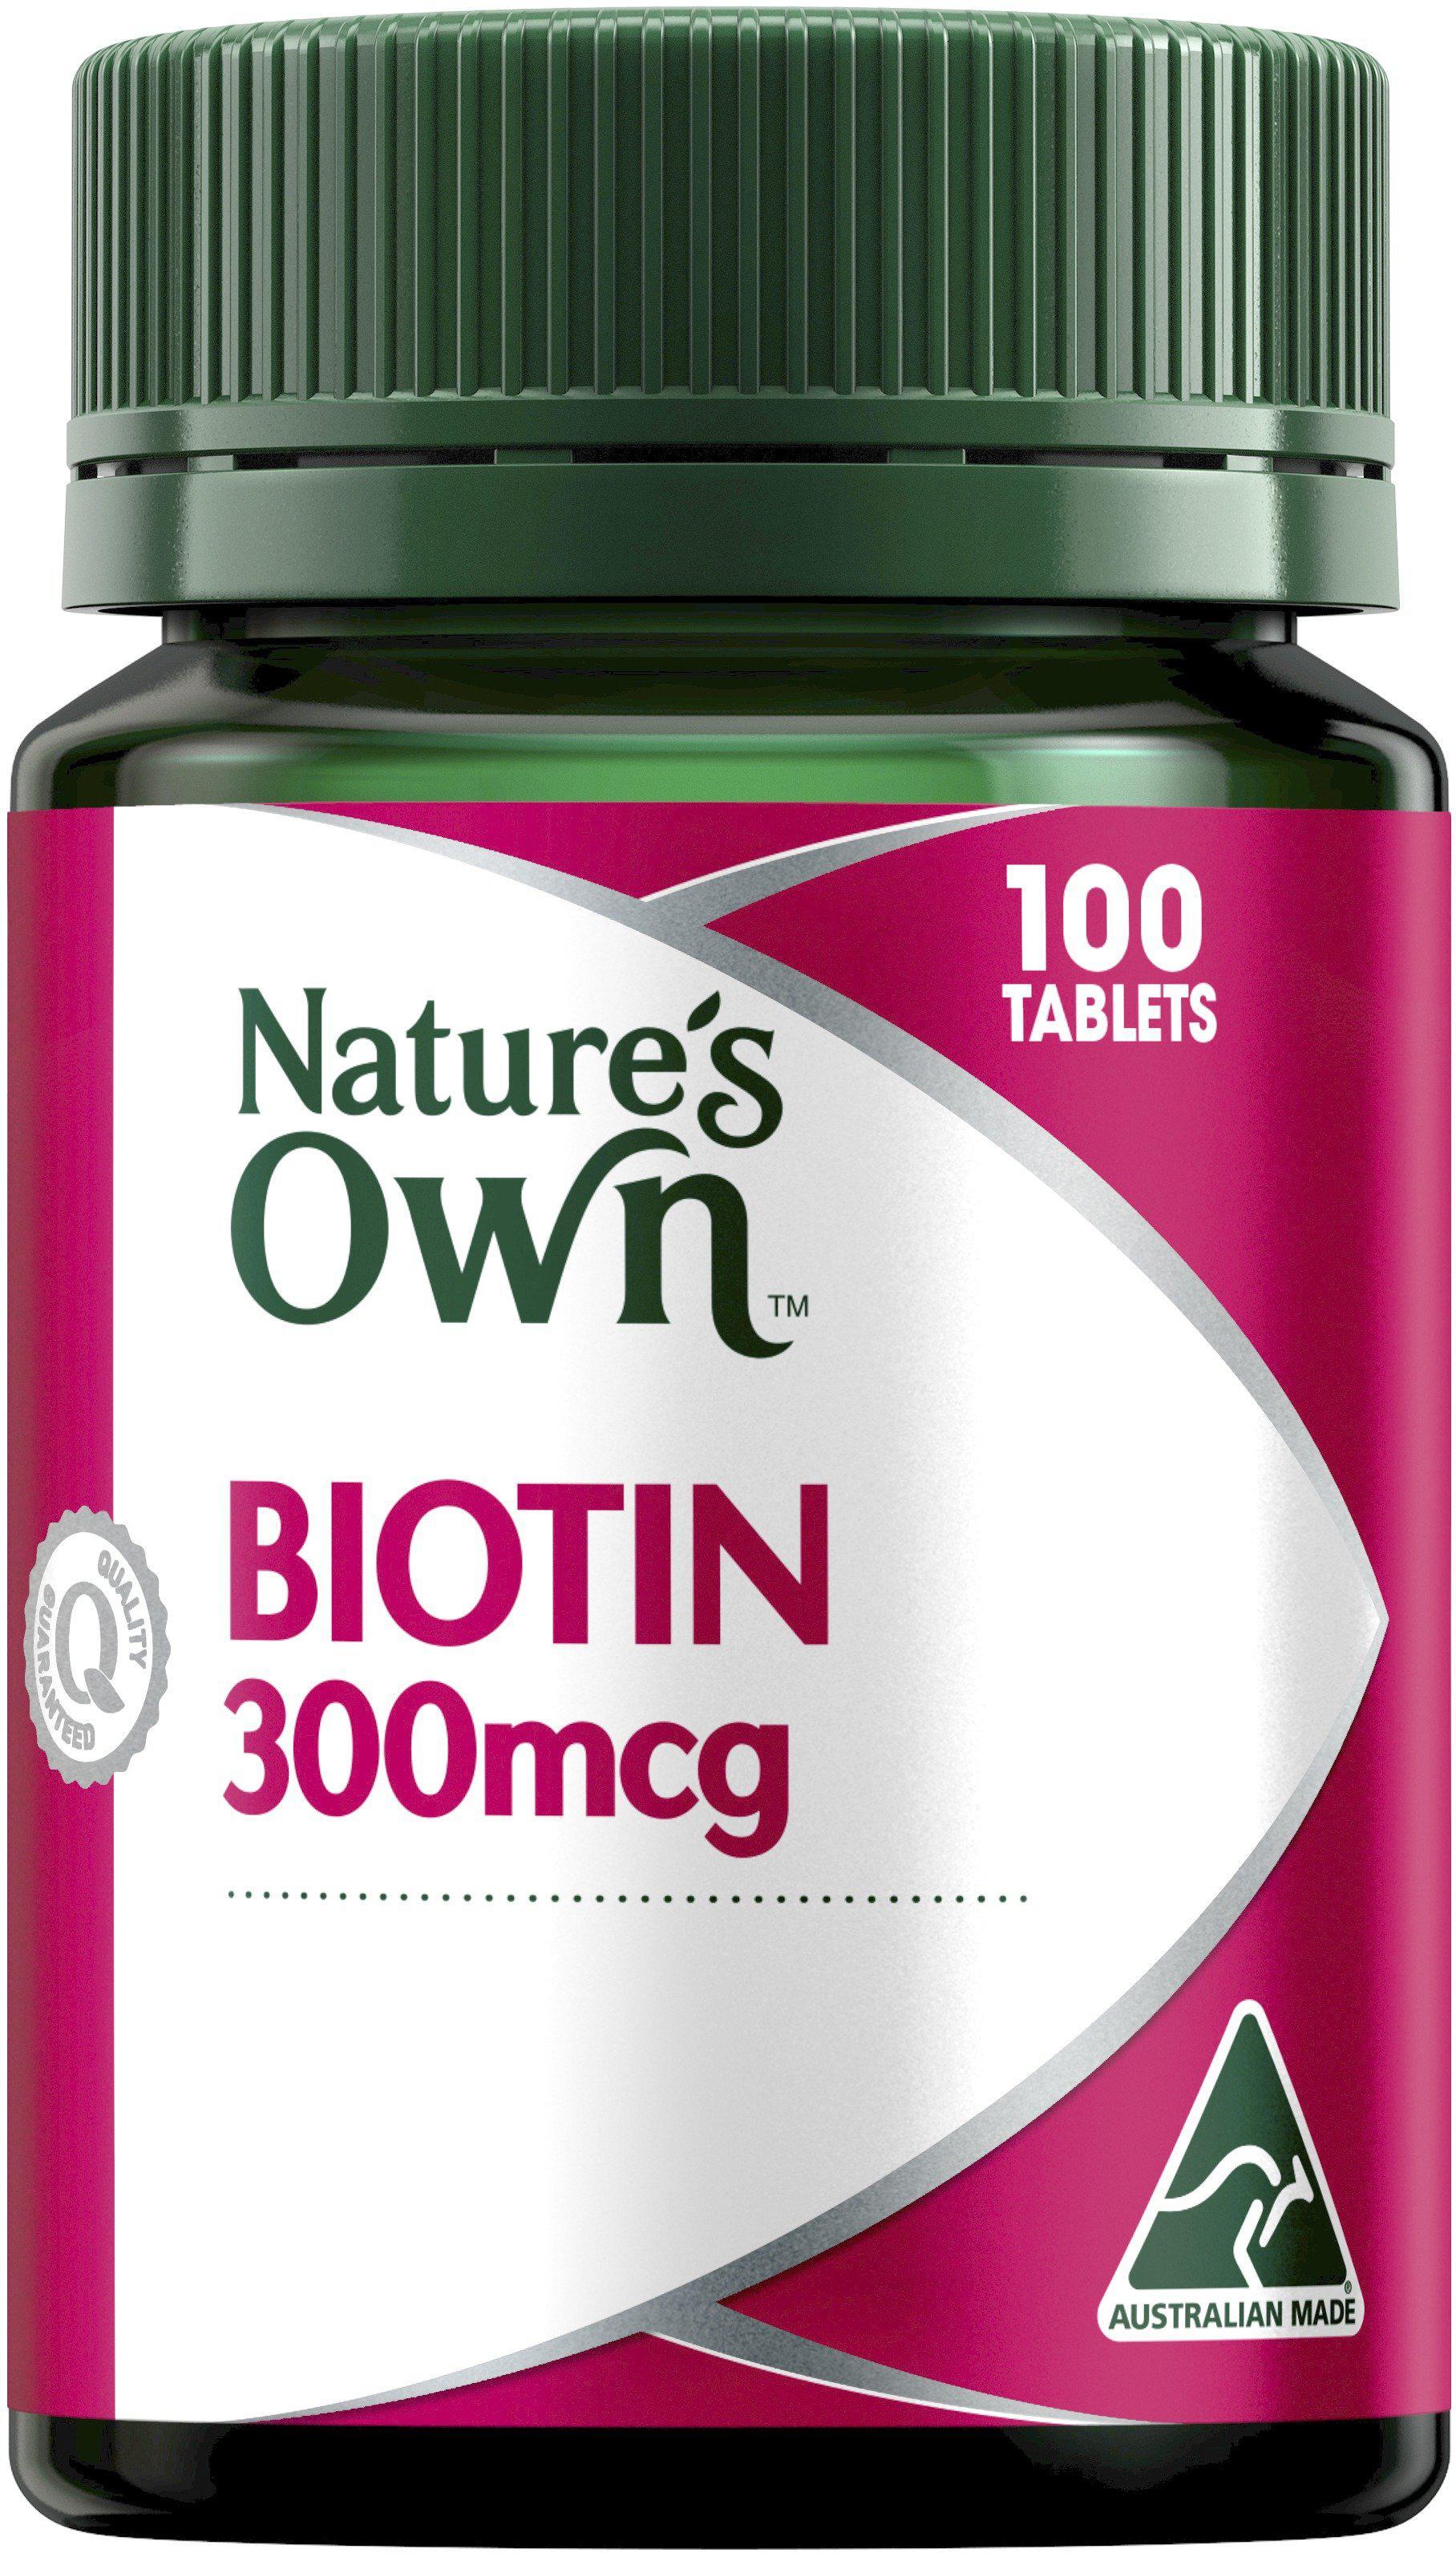 Natures Own Biotin 300mcg 100 Tablets